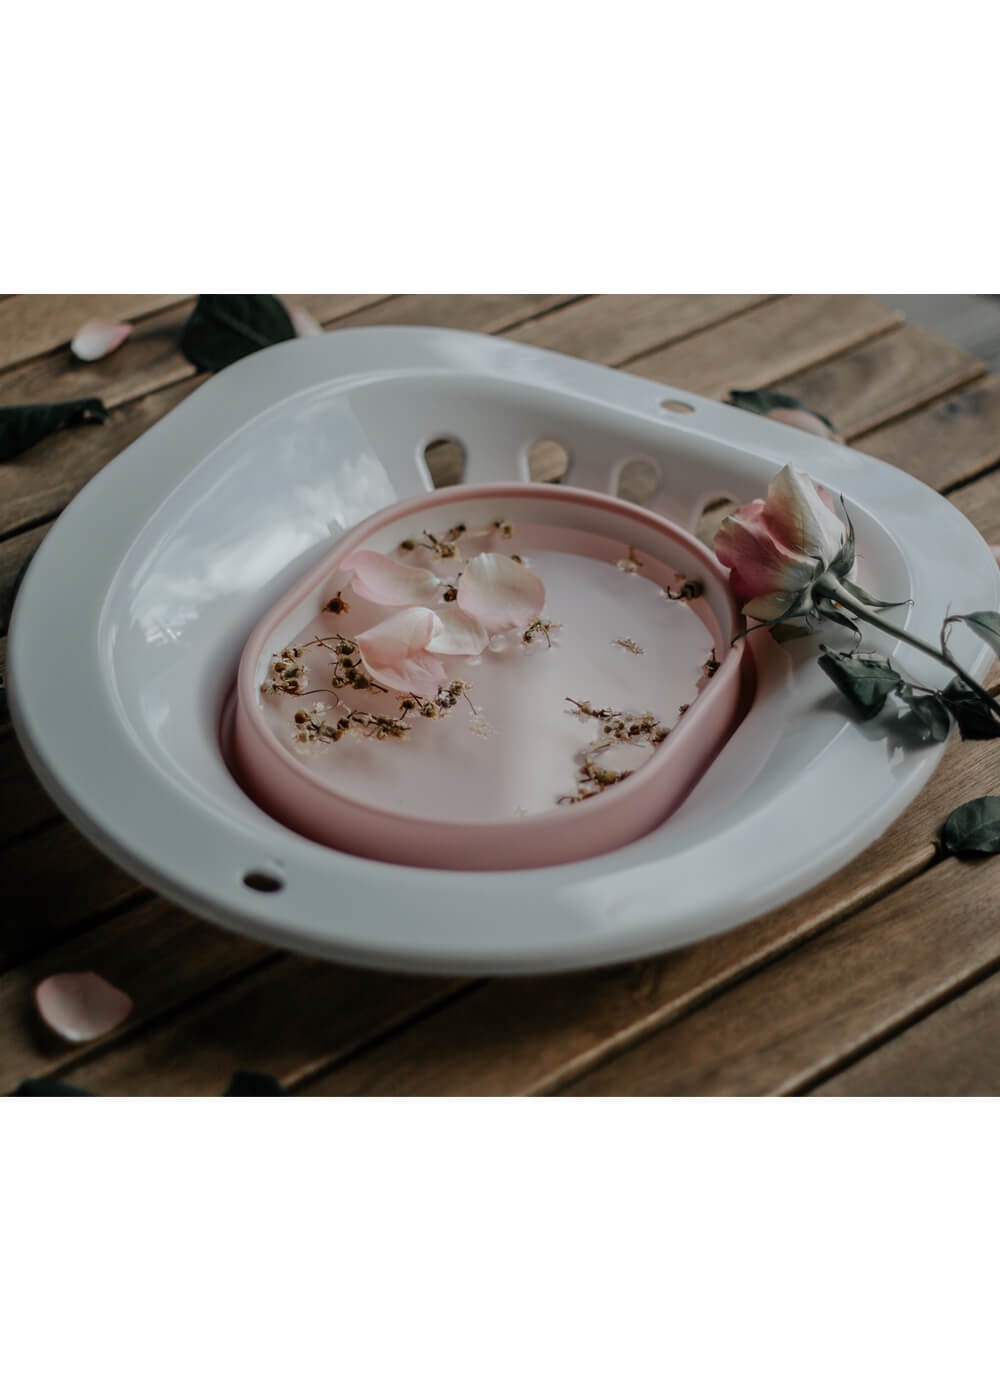 Sitz Bath Tub for Postpartum Care | Queen Bee